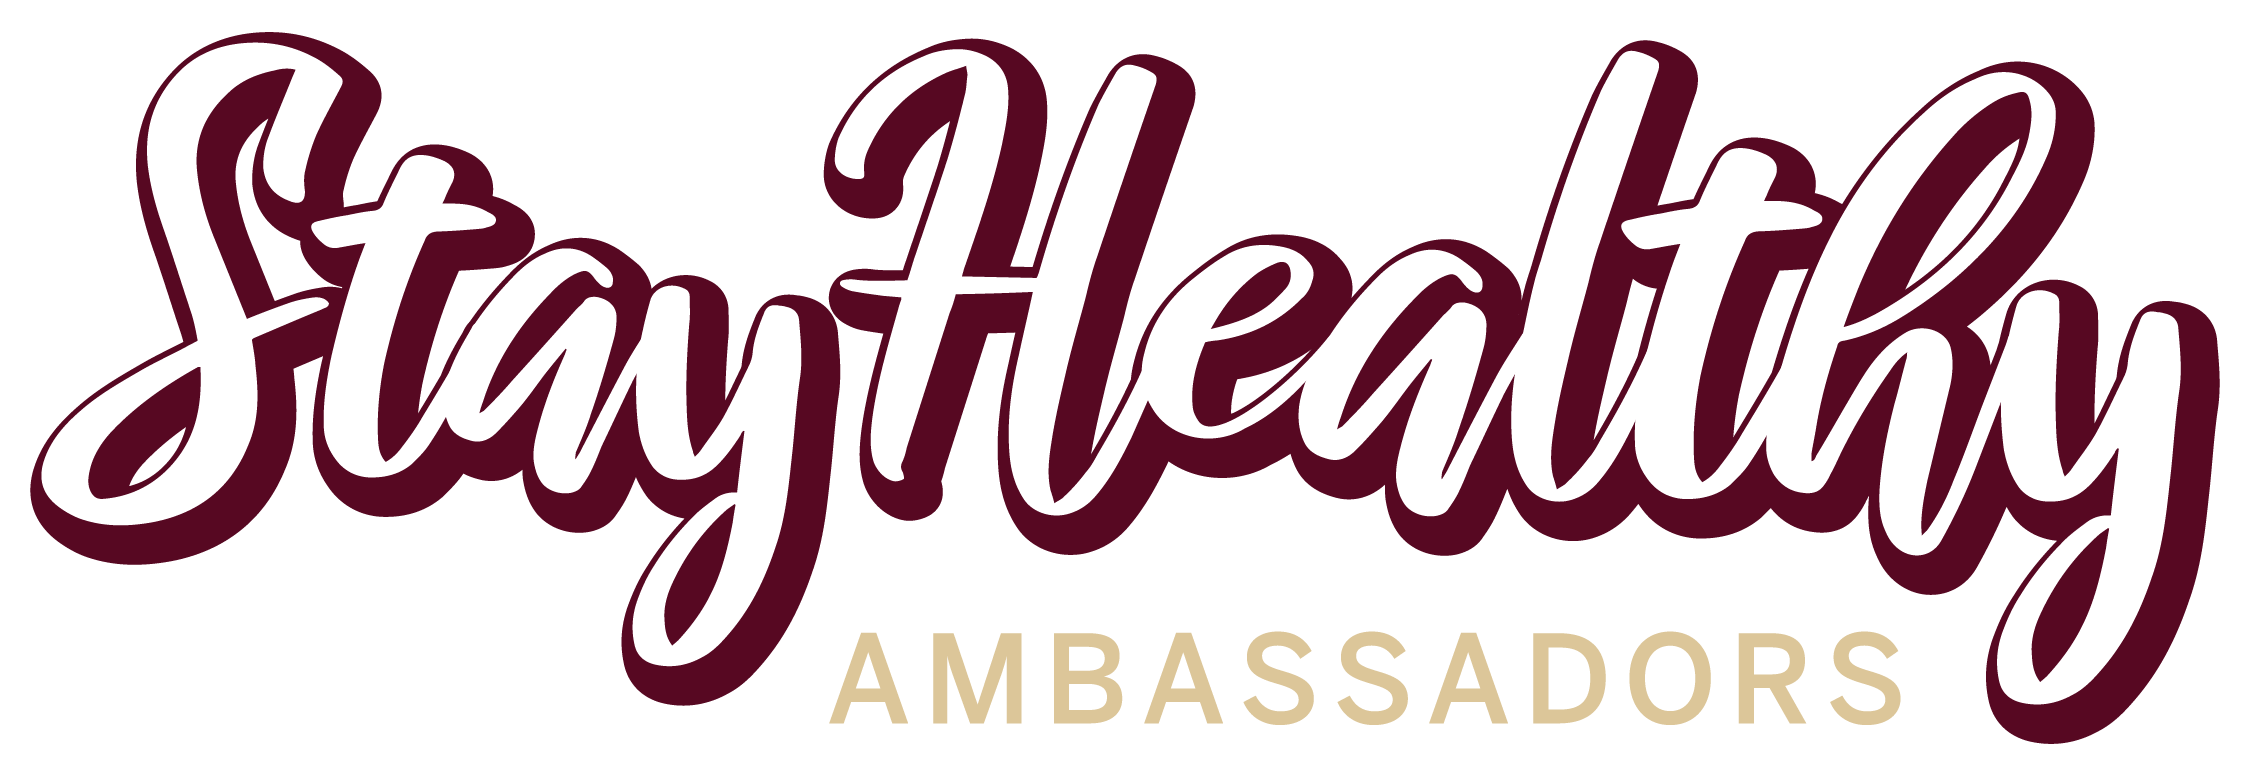 Stay Healthy Ambassadors